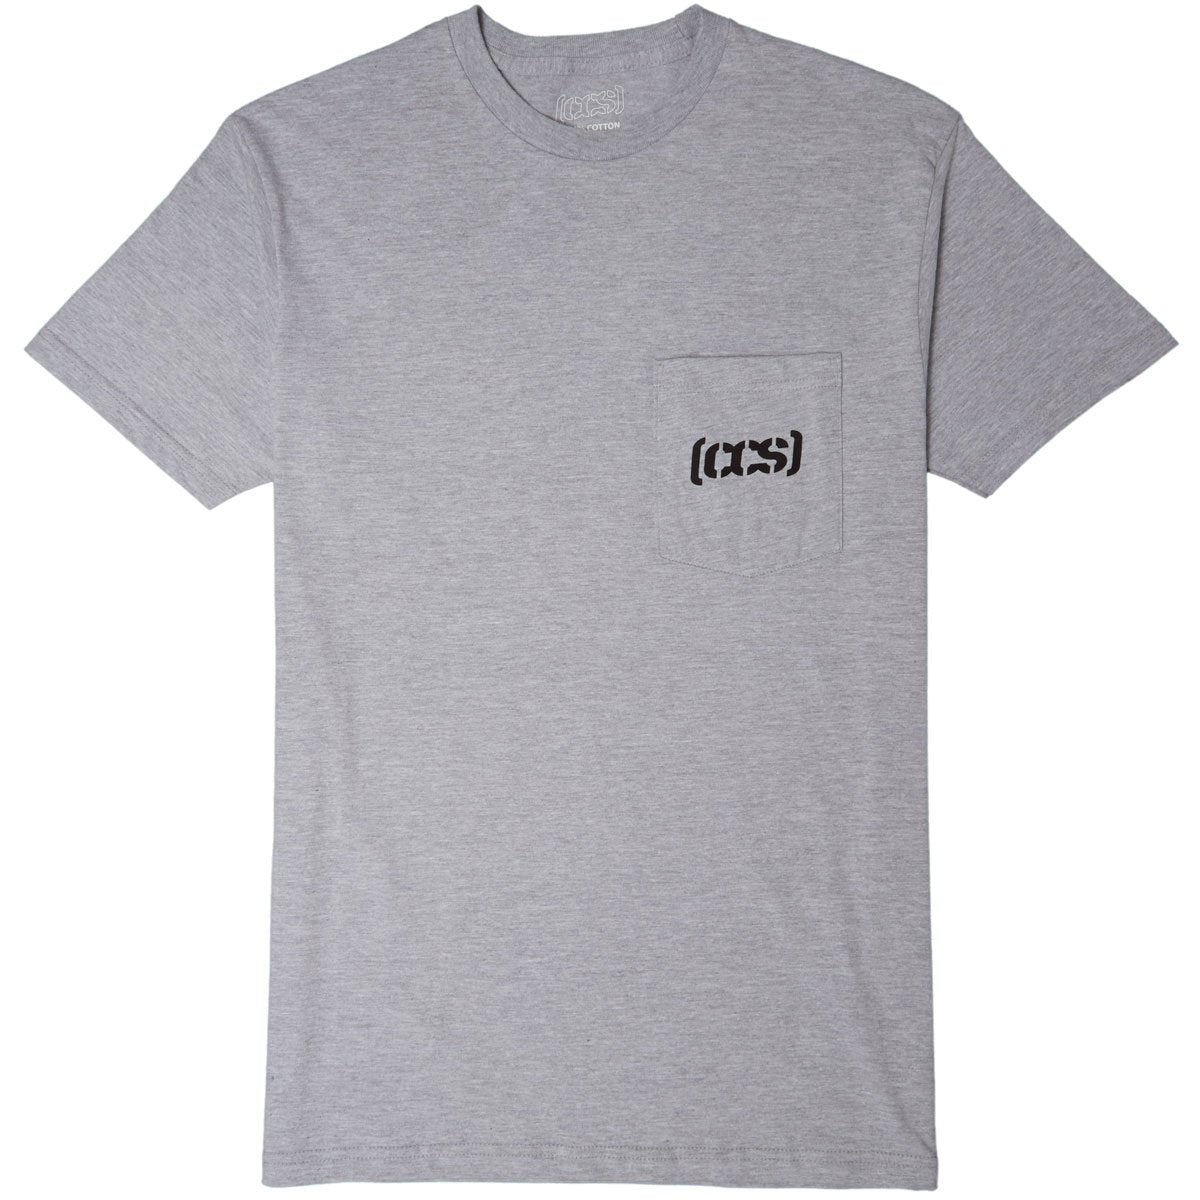 CCS Bracket Logo Pocket T-Shirt - Heather Grey/Black image 1